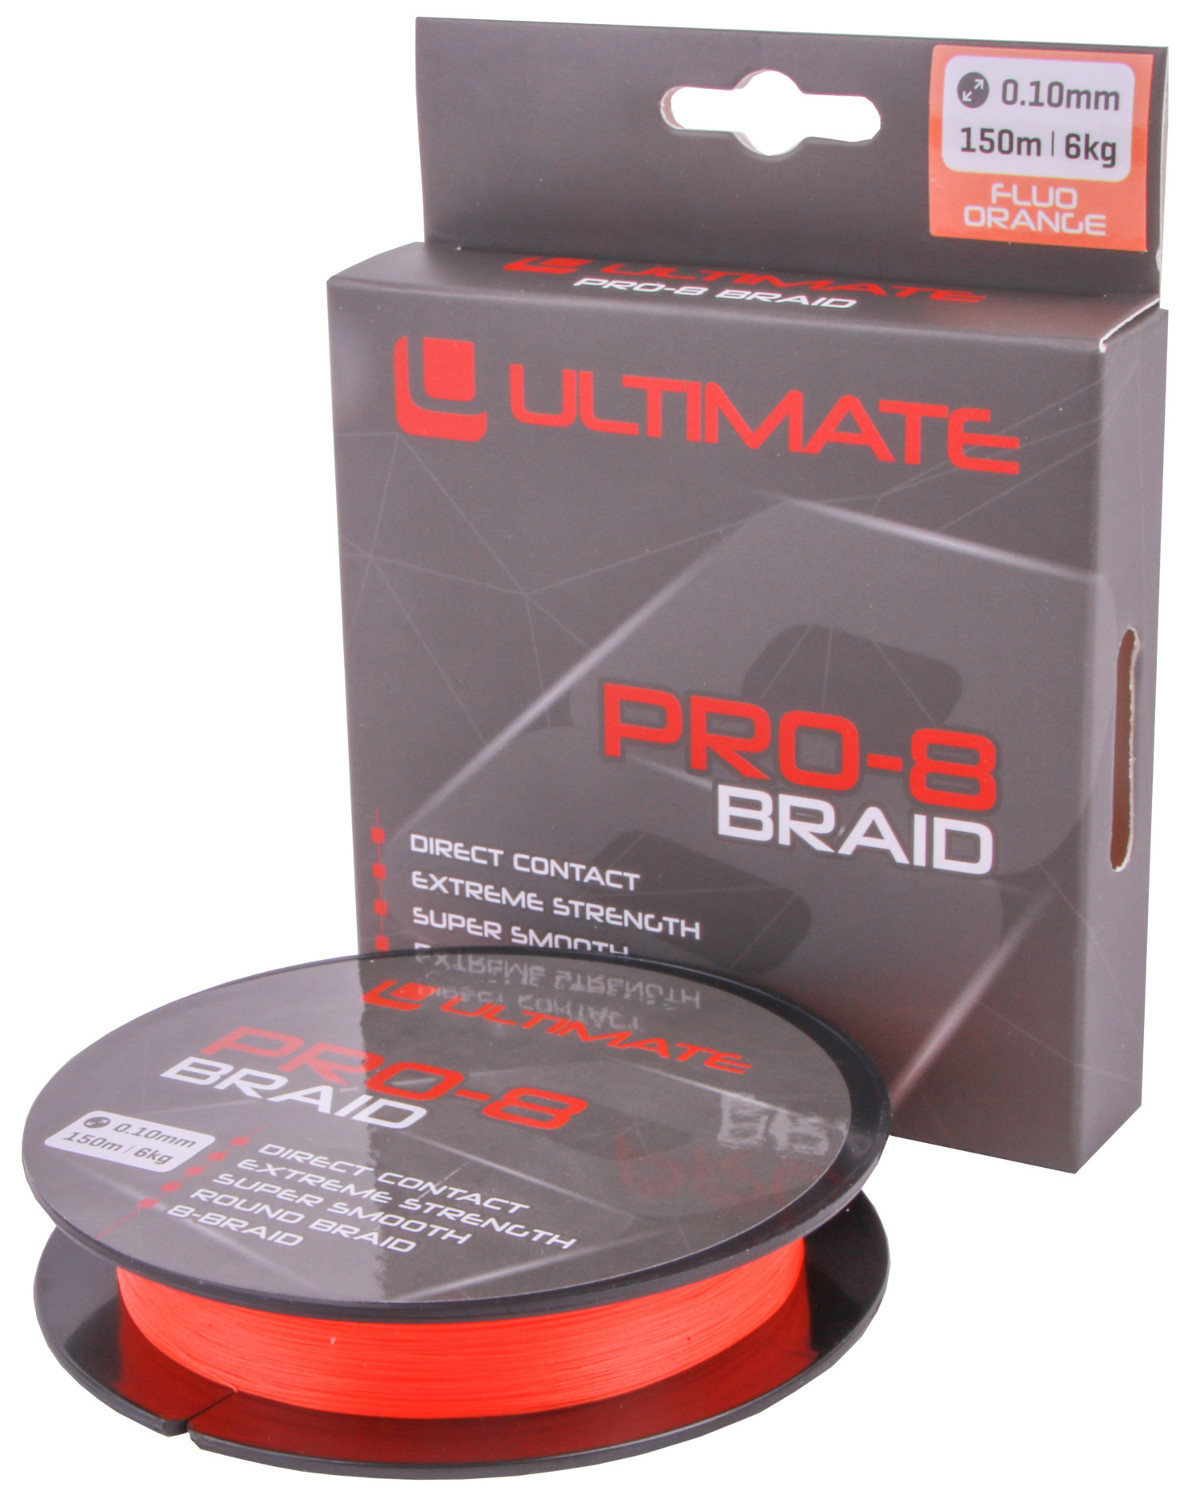 Ultimate Pro-8 Braid 0.10mm 6kg 150m Fluo Orange